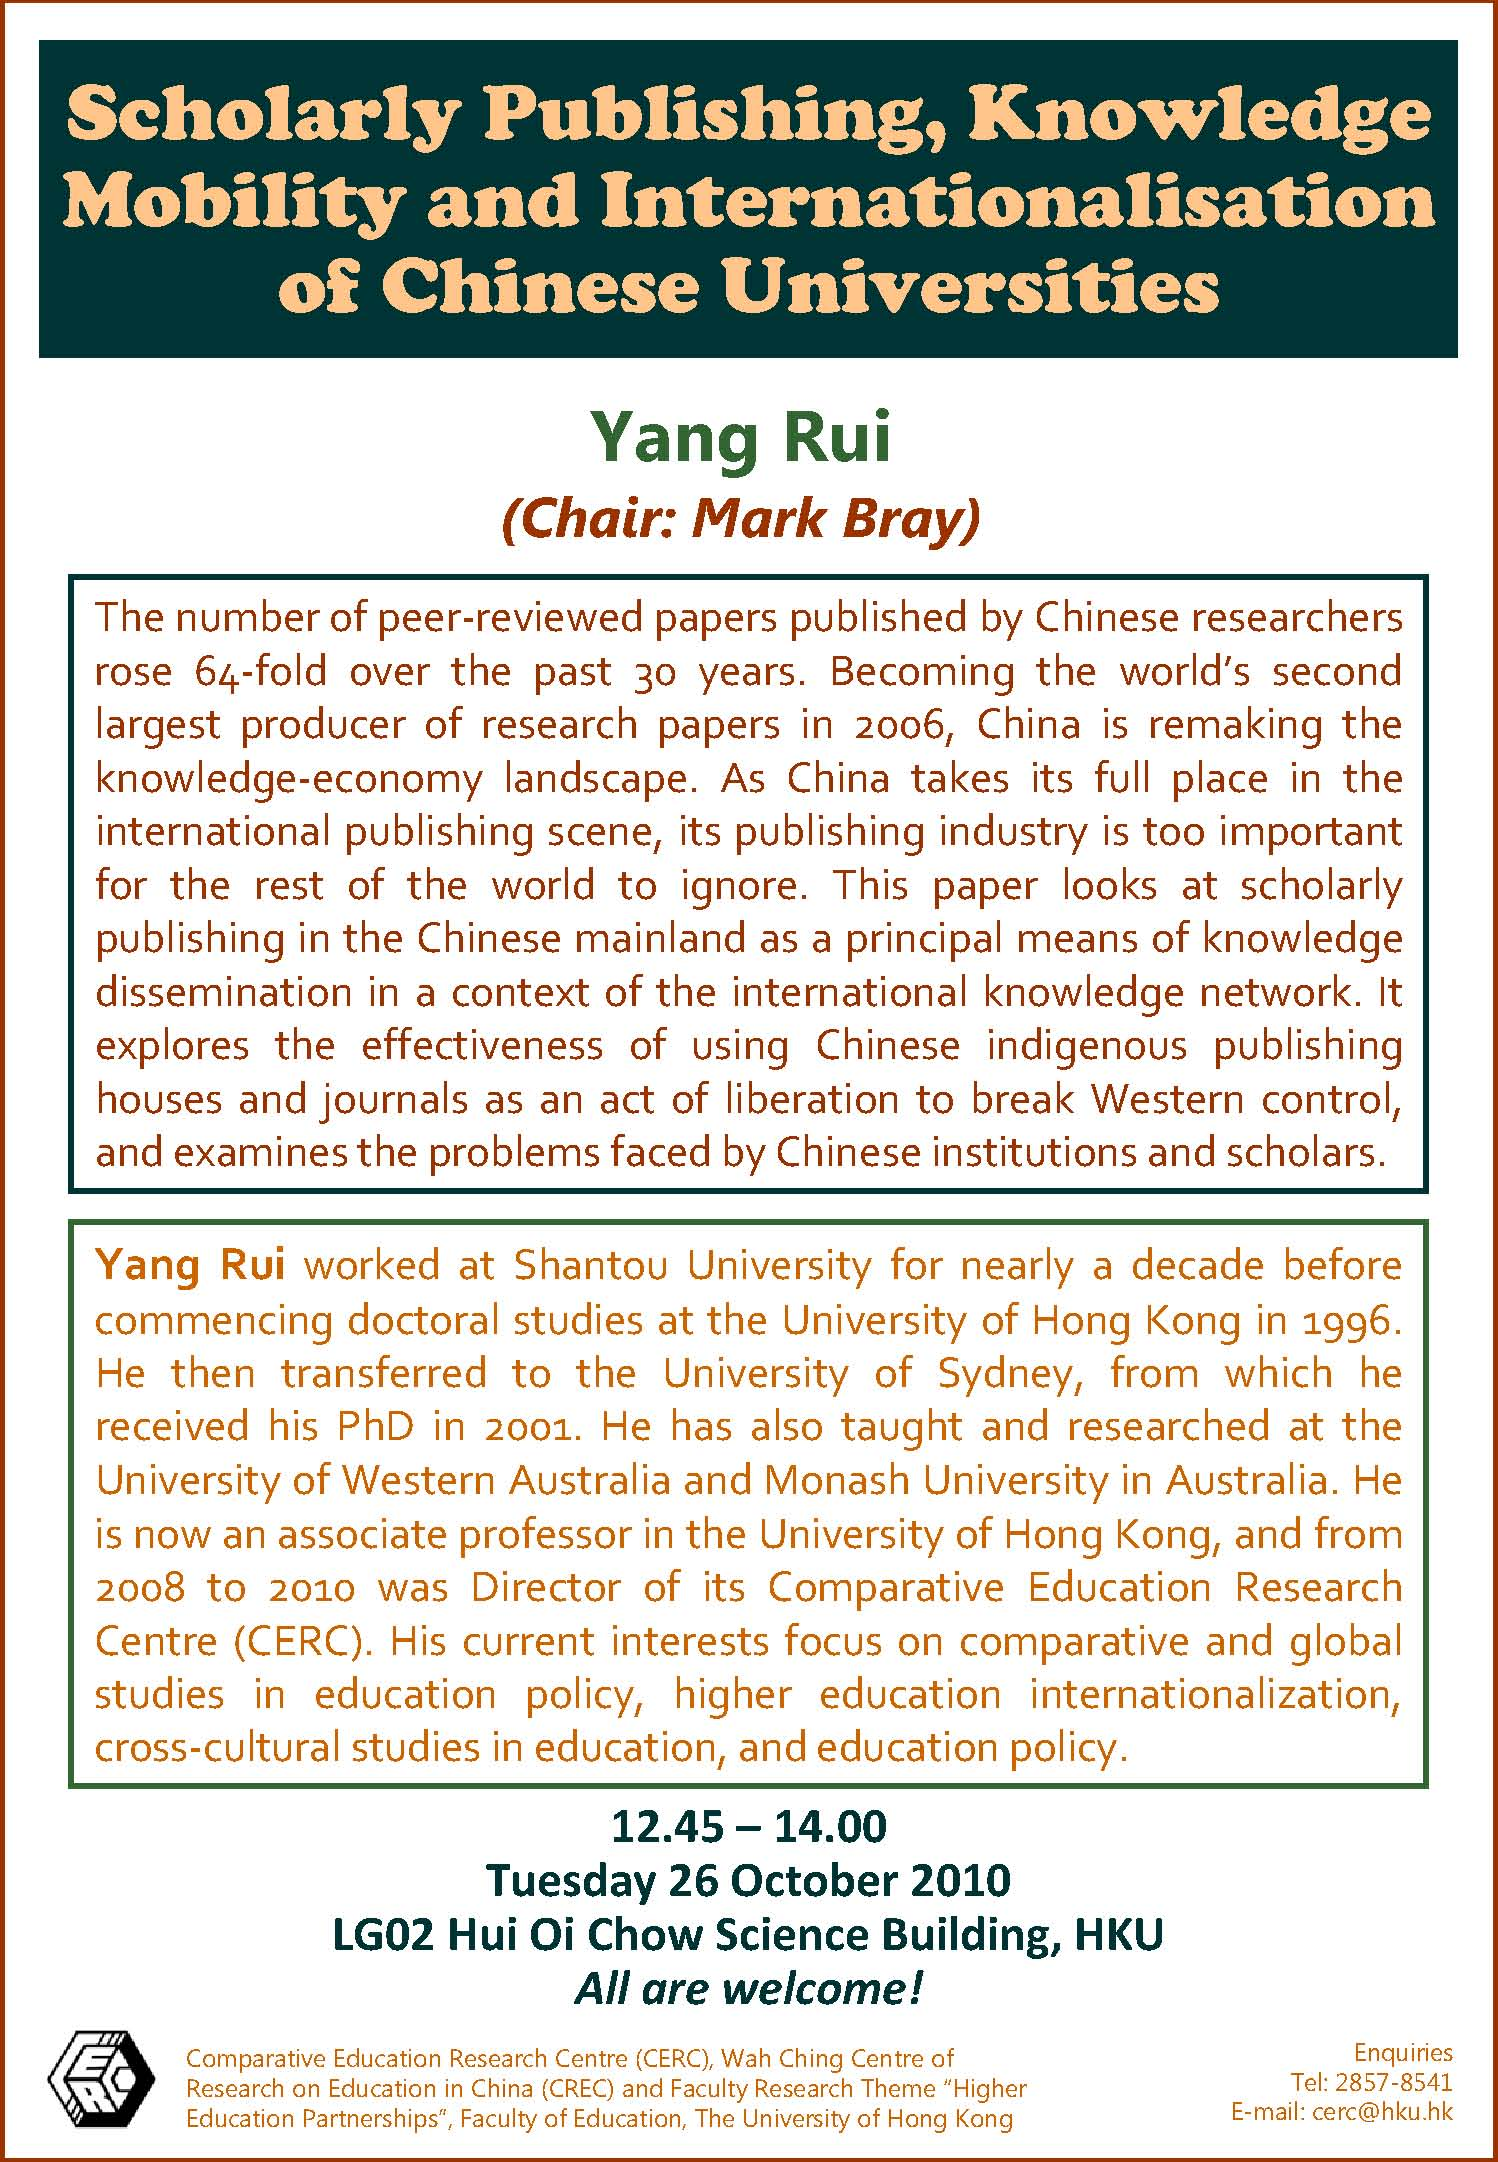 Seminar on Scholarly Publishing, Knowledge Mobility and Internationalisation of Chinese Universities